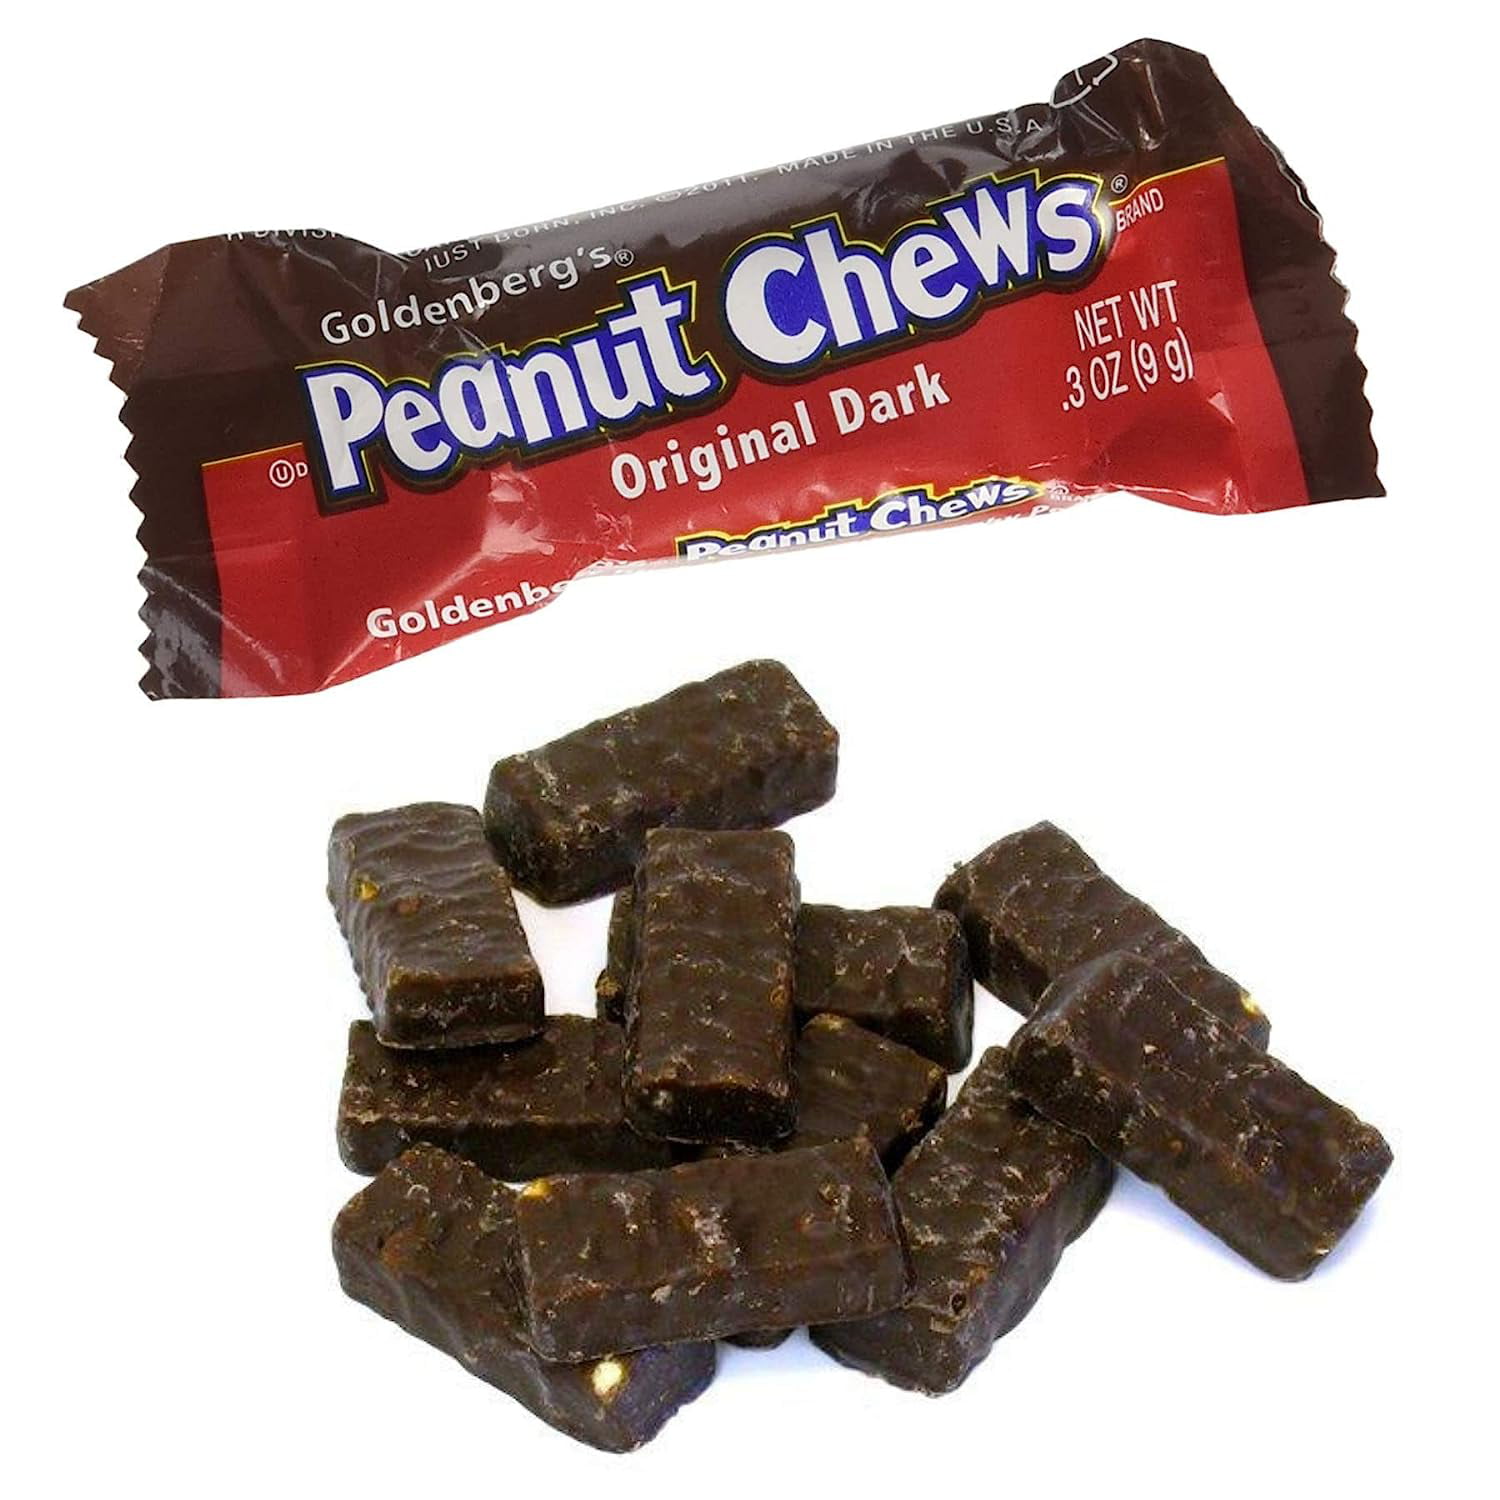 Goldenbergs Peanut Chews, Original Dark - 24 pack, 2.0 oz bars